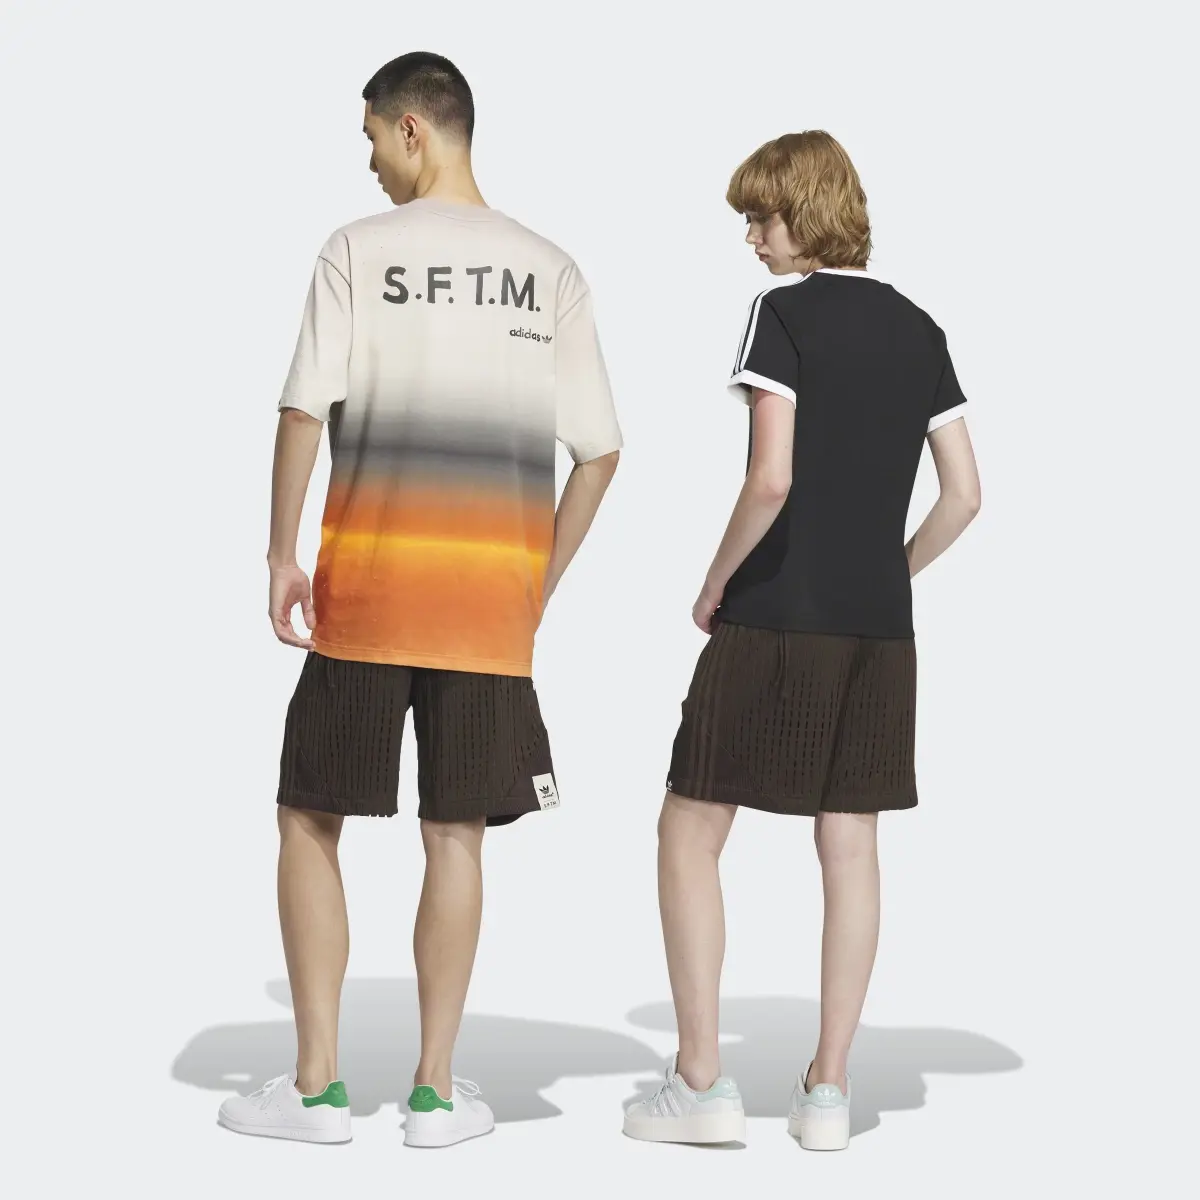 Adidas SFTM Shorts (Gender Neutral). 2